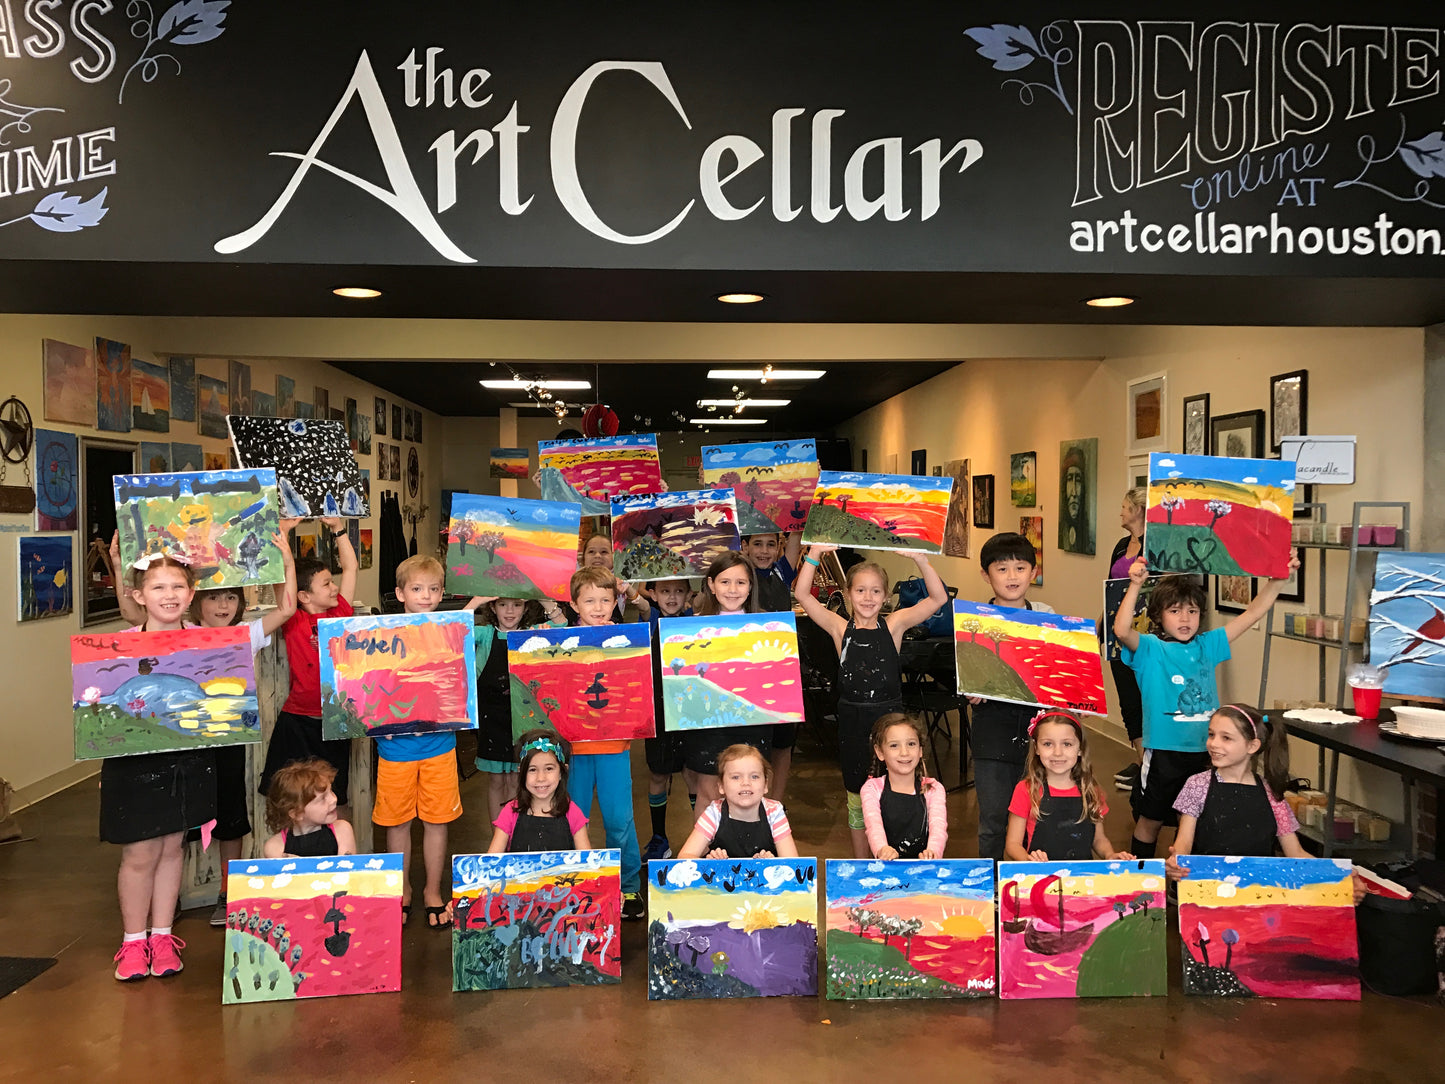 Sat, Nov 2, 9-11am "Polar Borealis" Public Houston Kids Painting Class